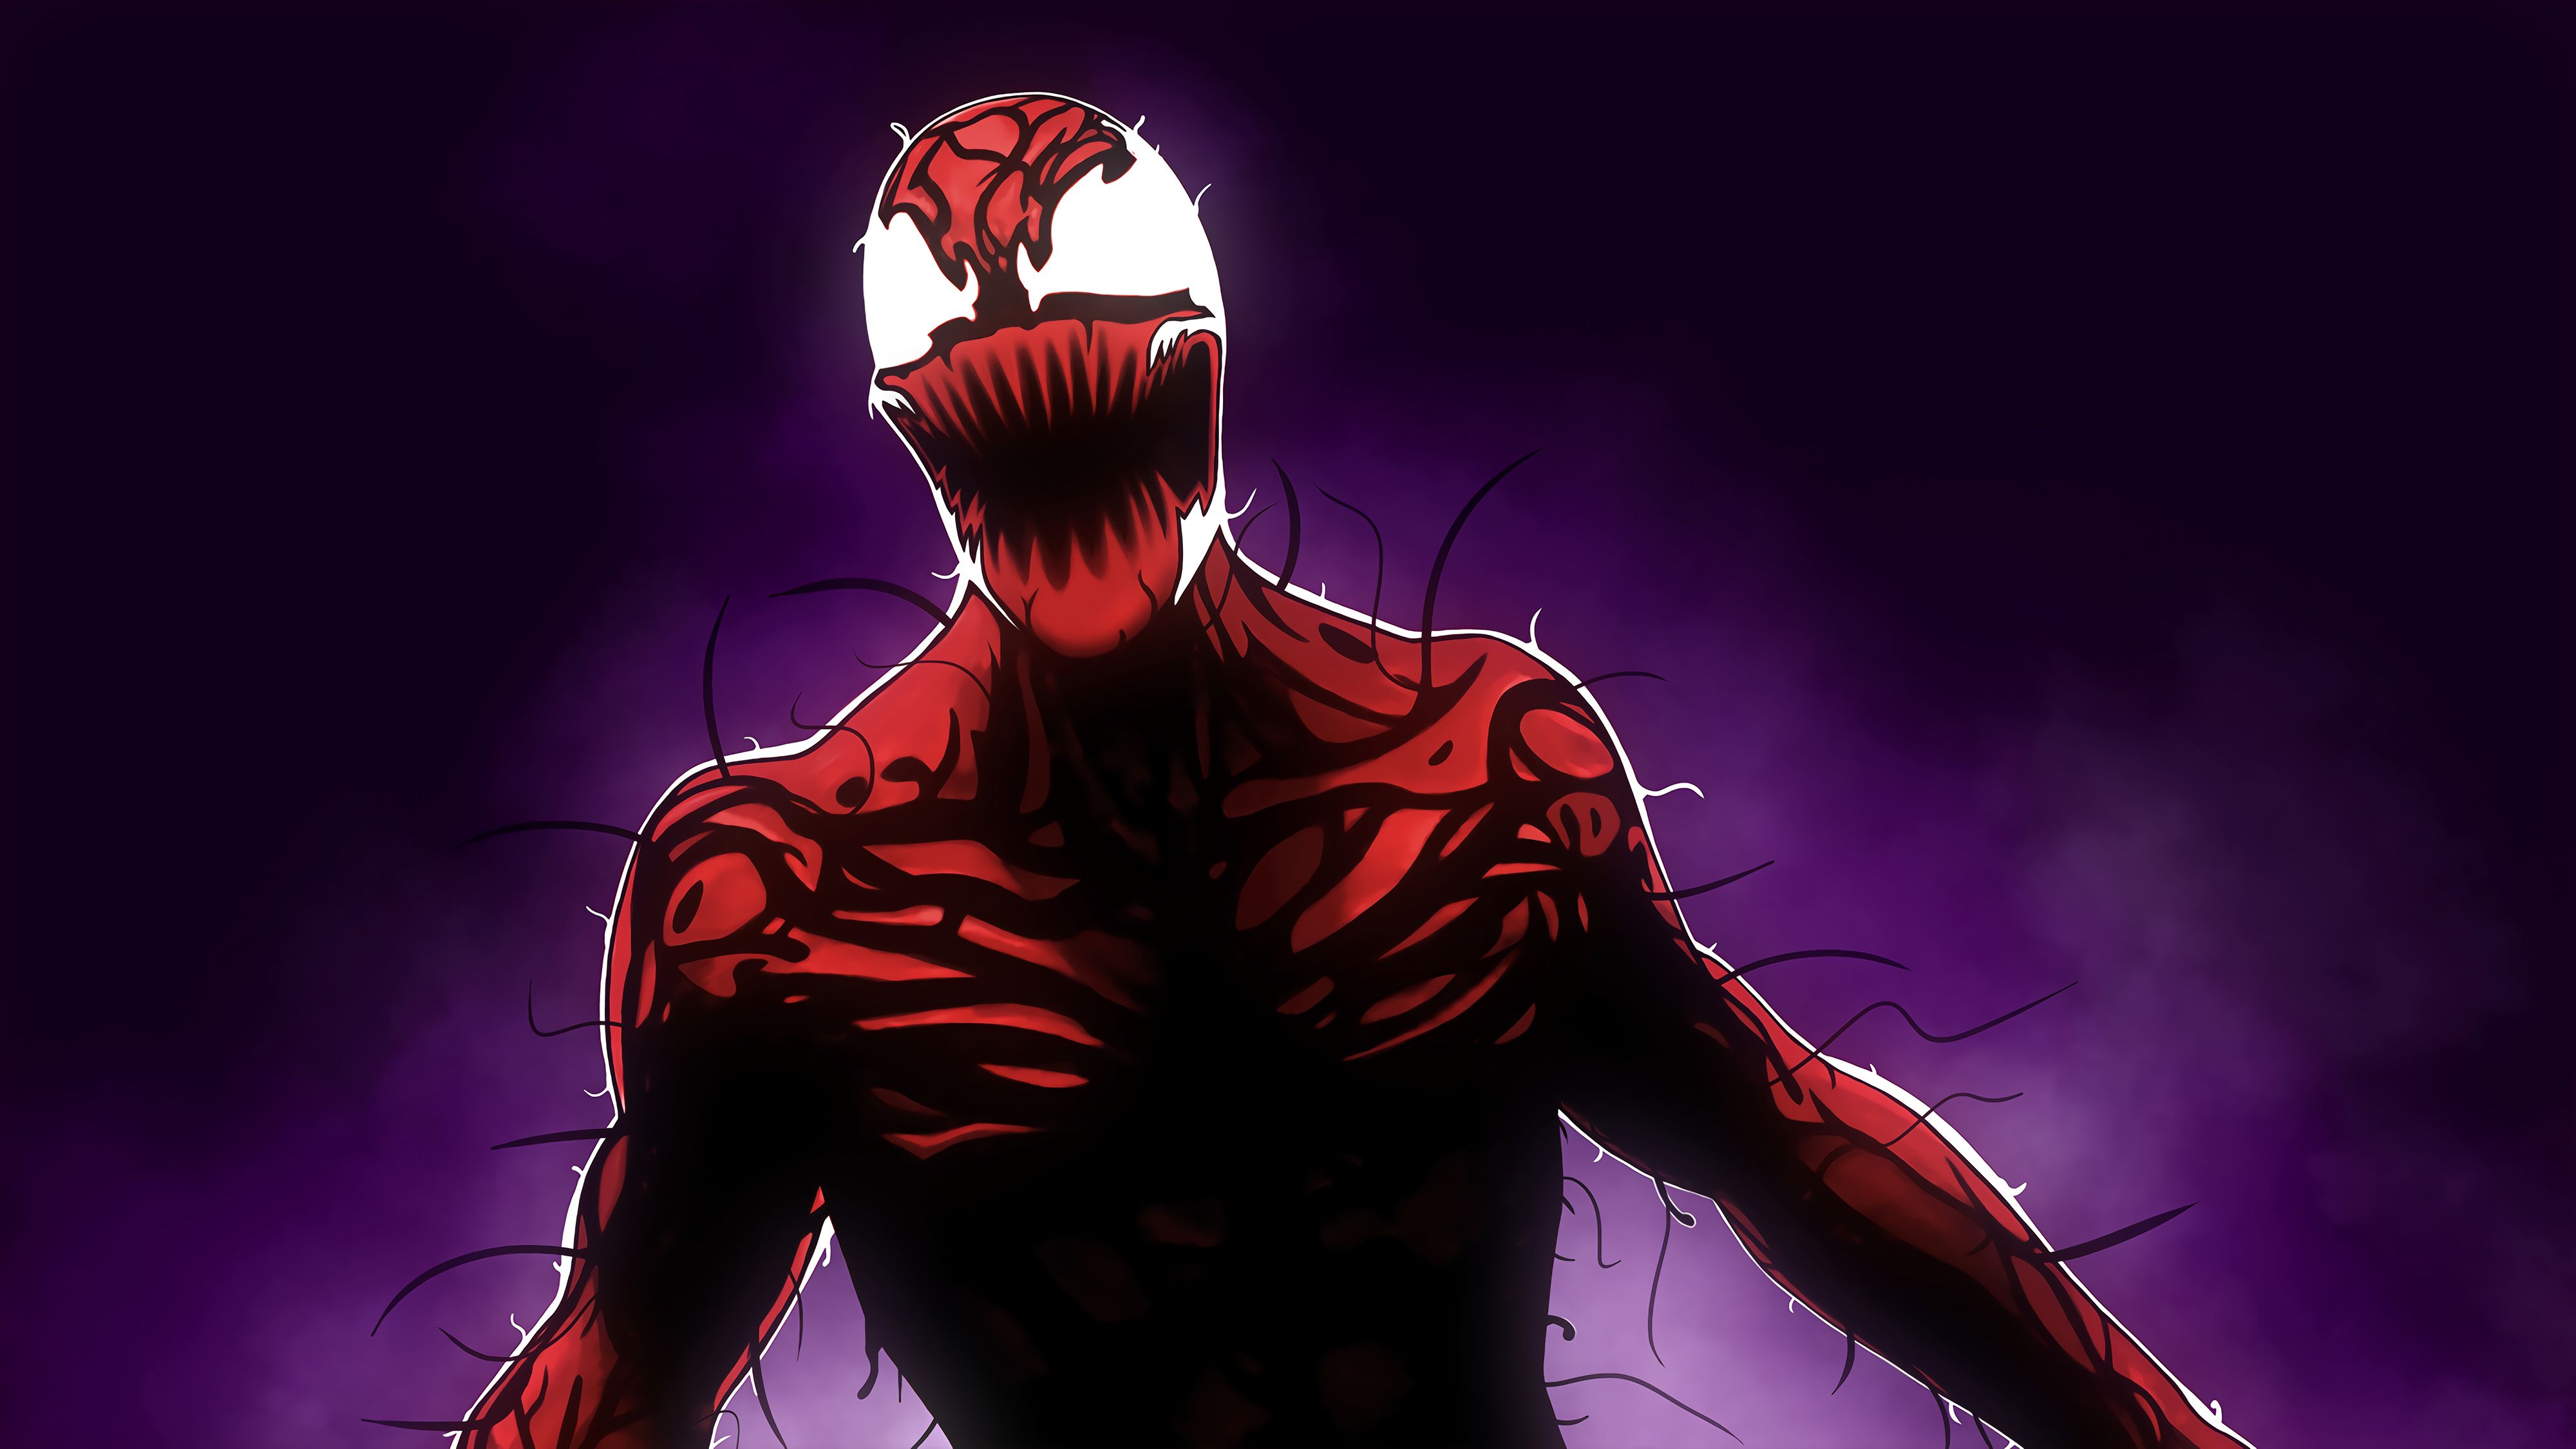 Carnage From Marvels Spider Man Series, HD Superheroes, 4k Wallpapers, Imag...